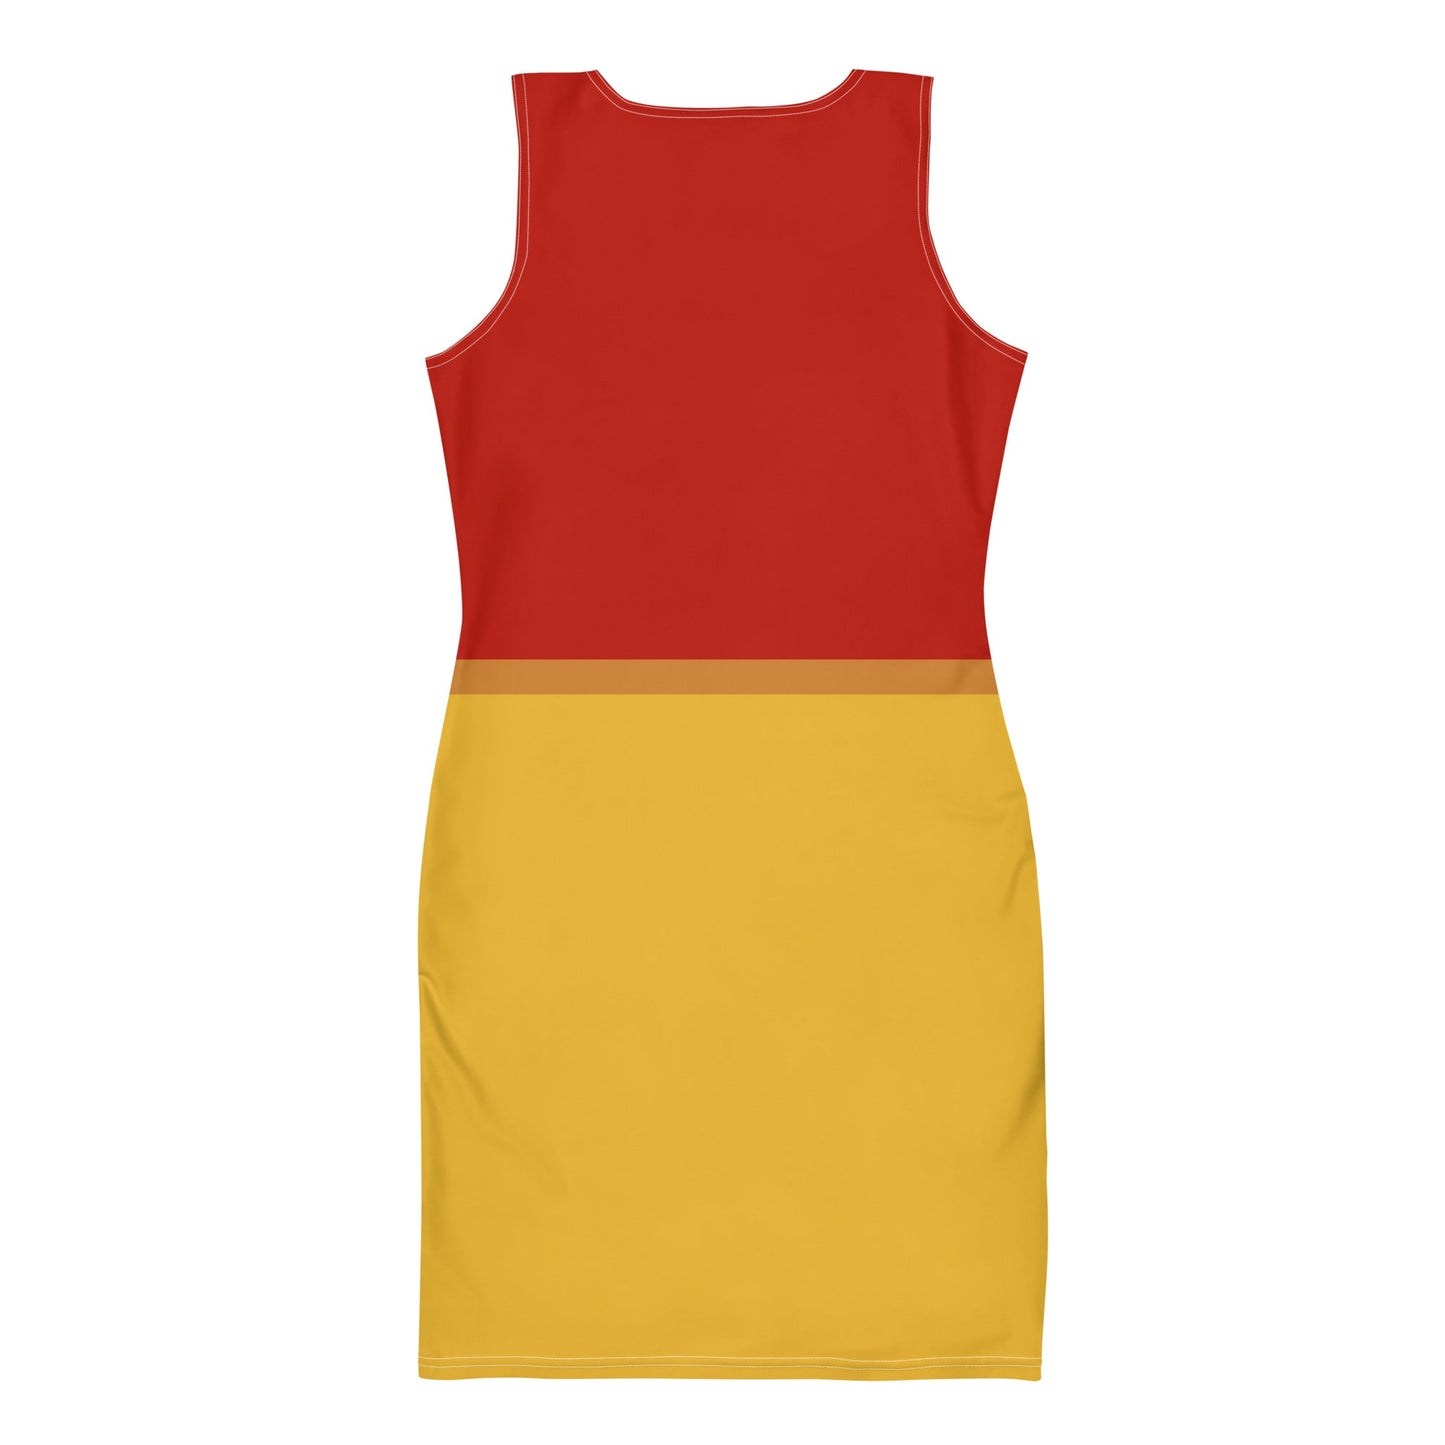 Hunny Tight Dress- Costume, Bounding, Cosplay christopher robin friendsdisney costumedisney dress#tag4##tag5##tag6#